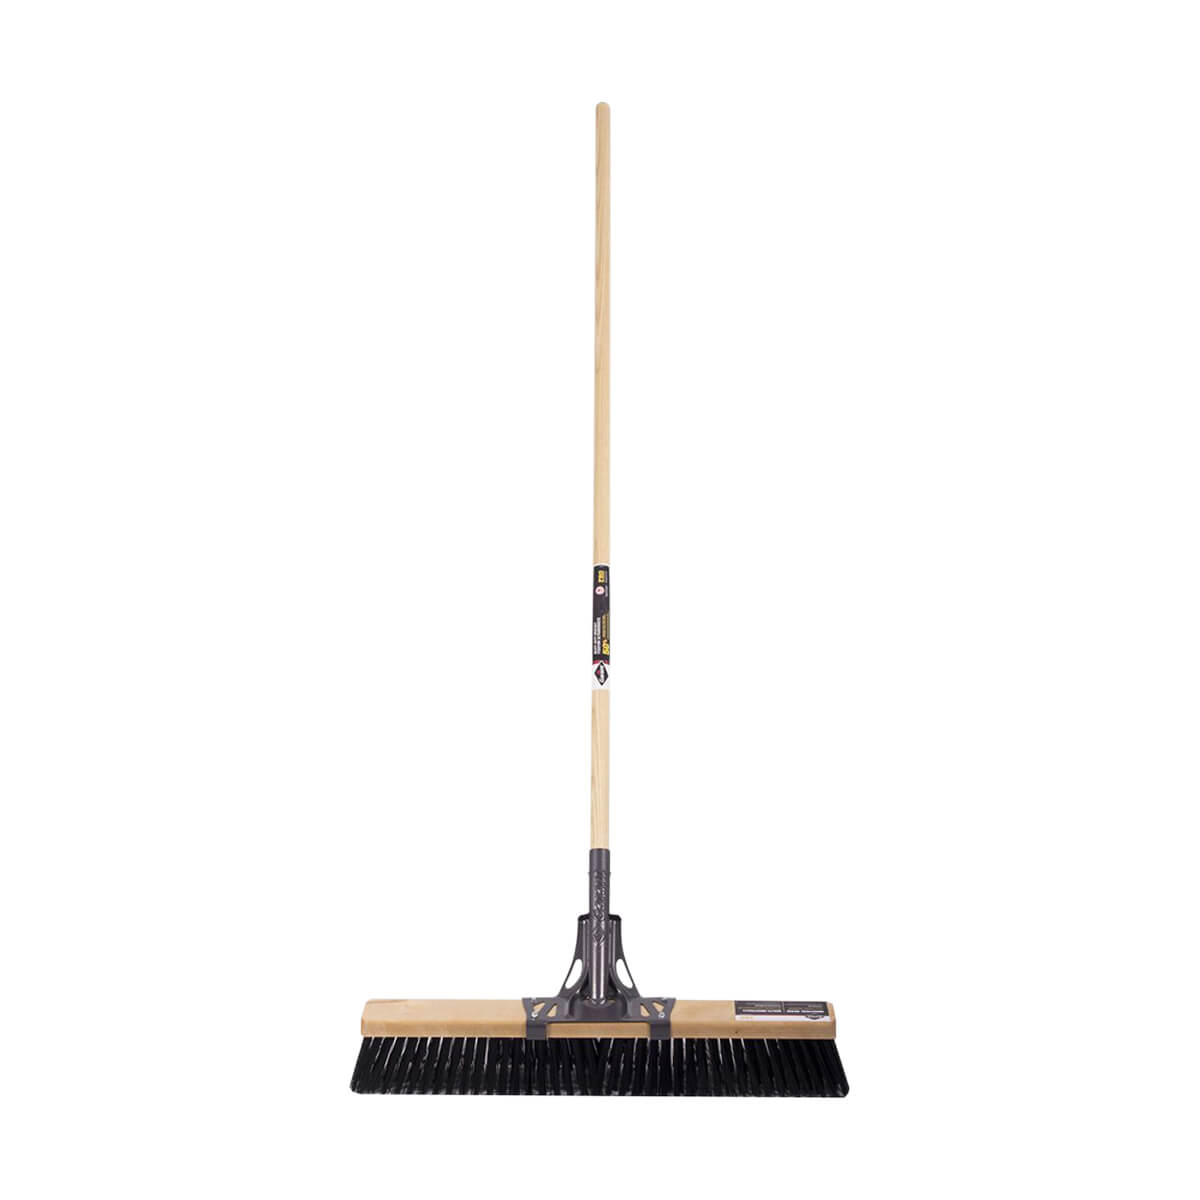 Garant Push Broom with Rough Wood Handle - 24-in